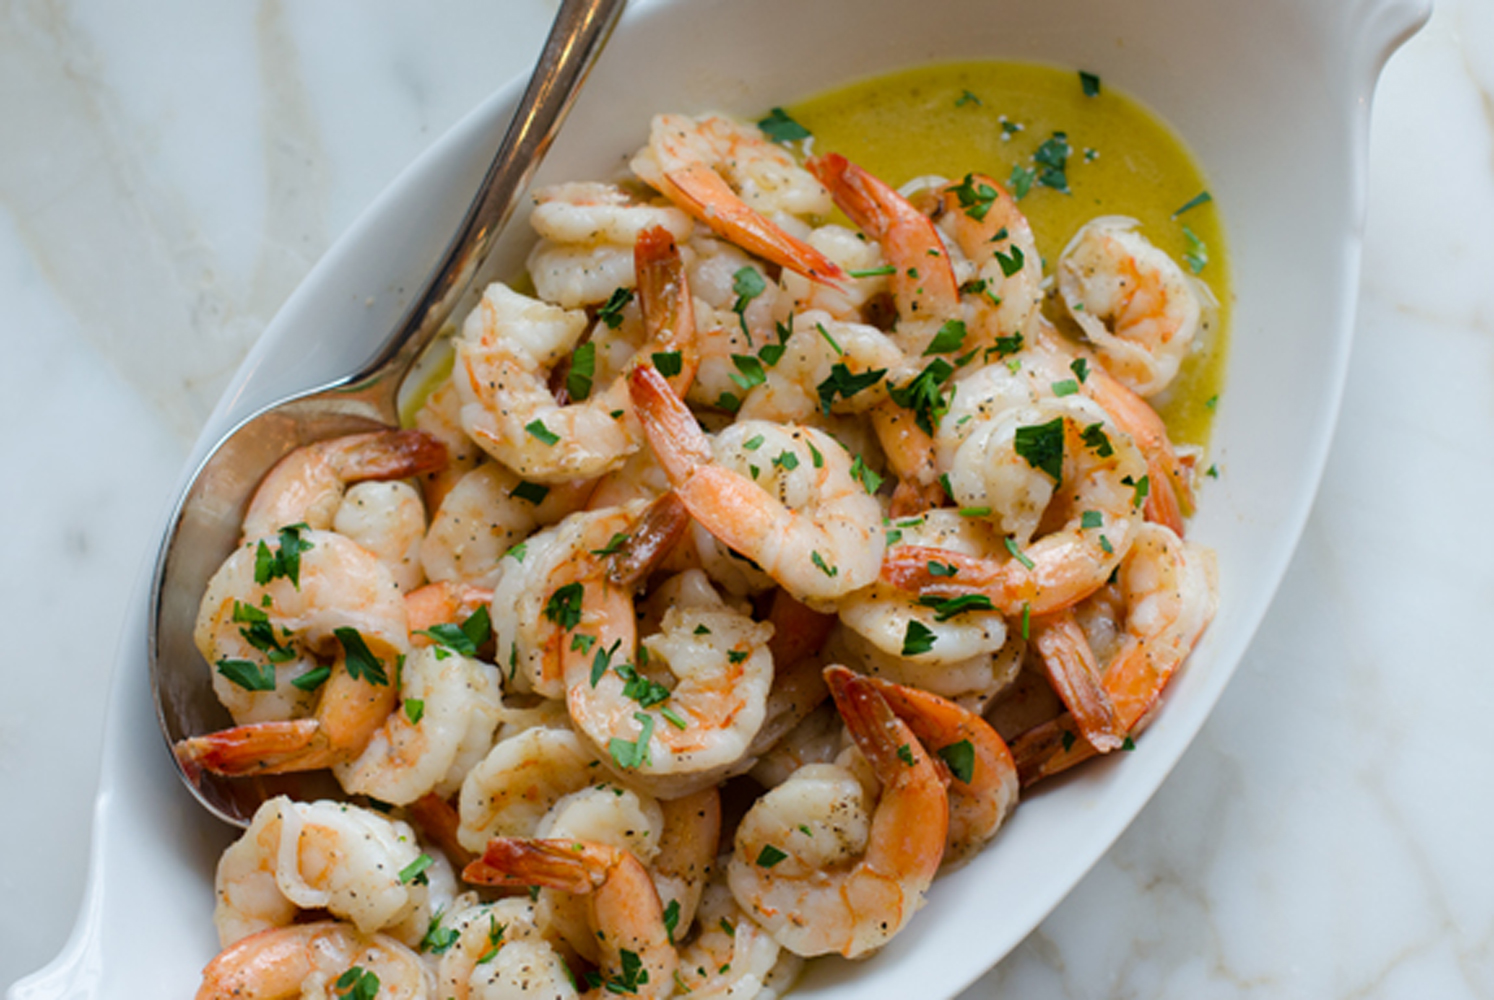 https://www.onceuponachef.com/images/2014/03/Easy-Garlic-Butter-Shrimp-1.jpg